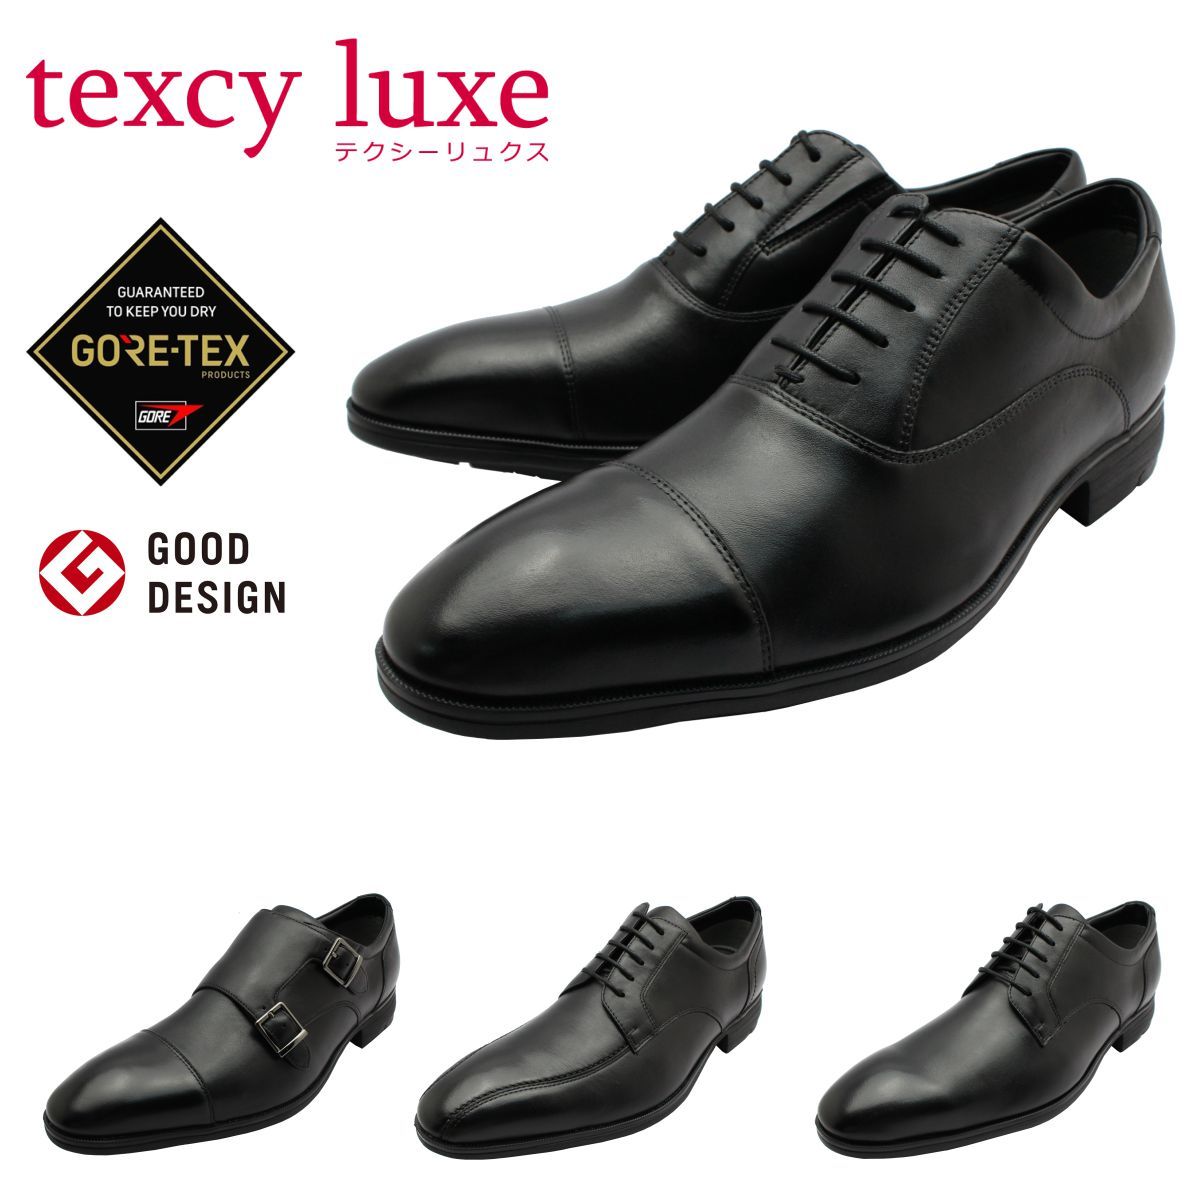 asics texcy luxe メンズ GORE-TEX ビジネスシューズ テクシーリュクス 